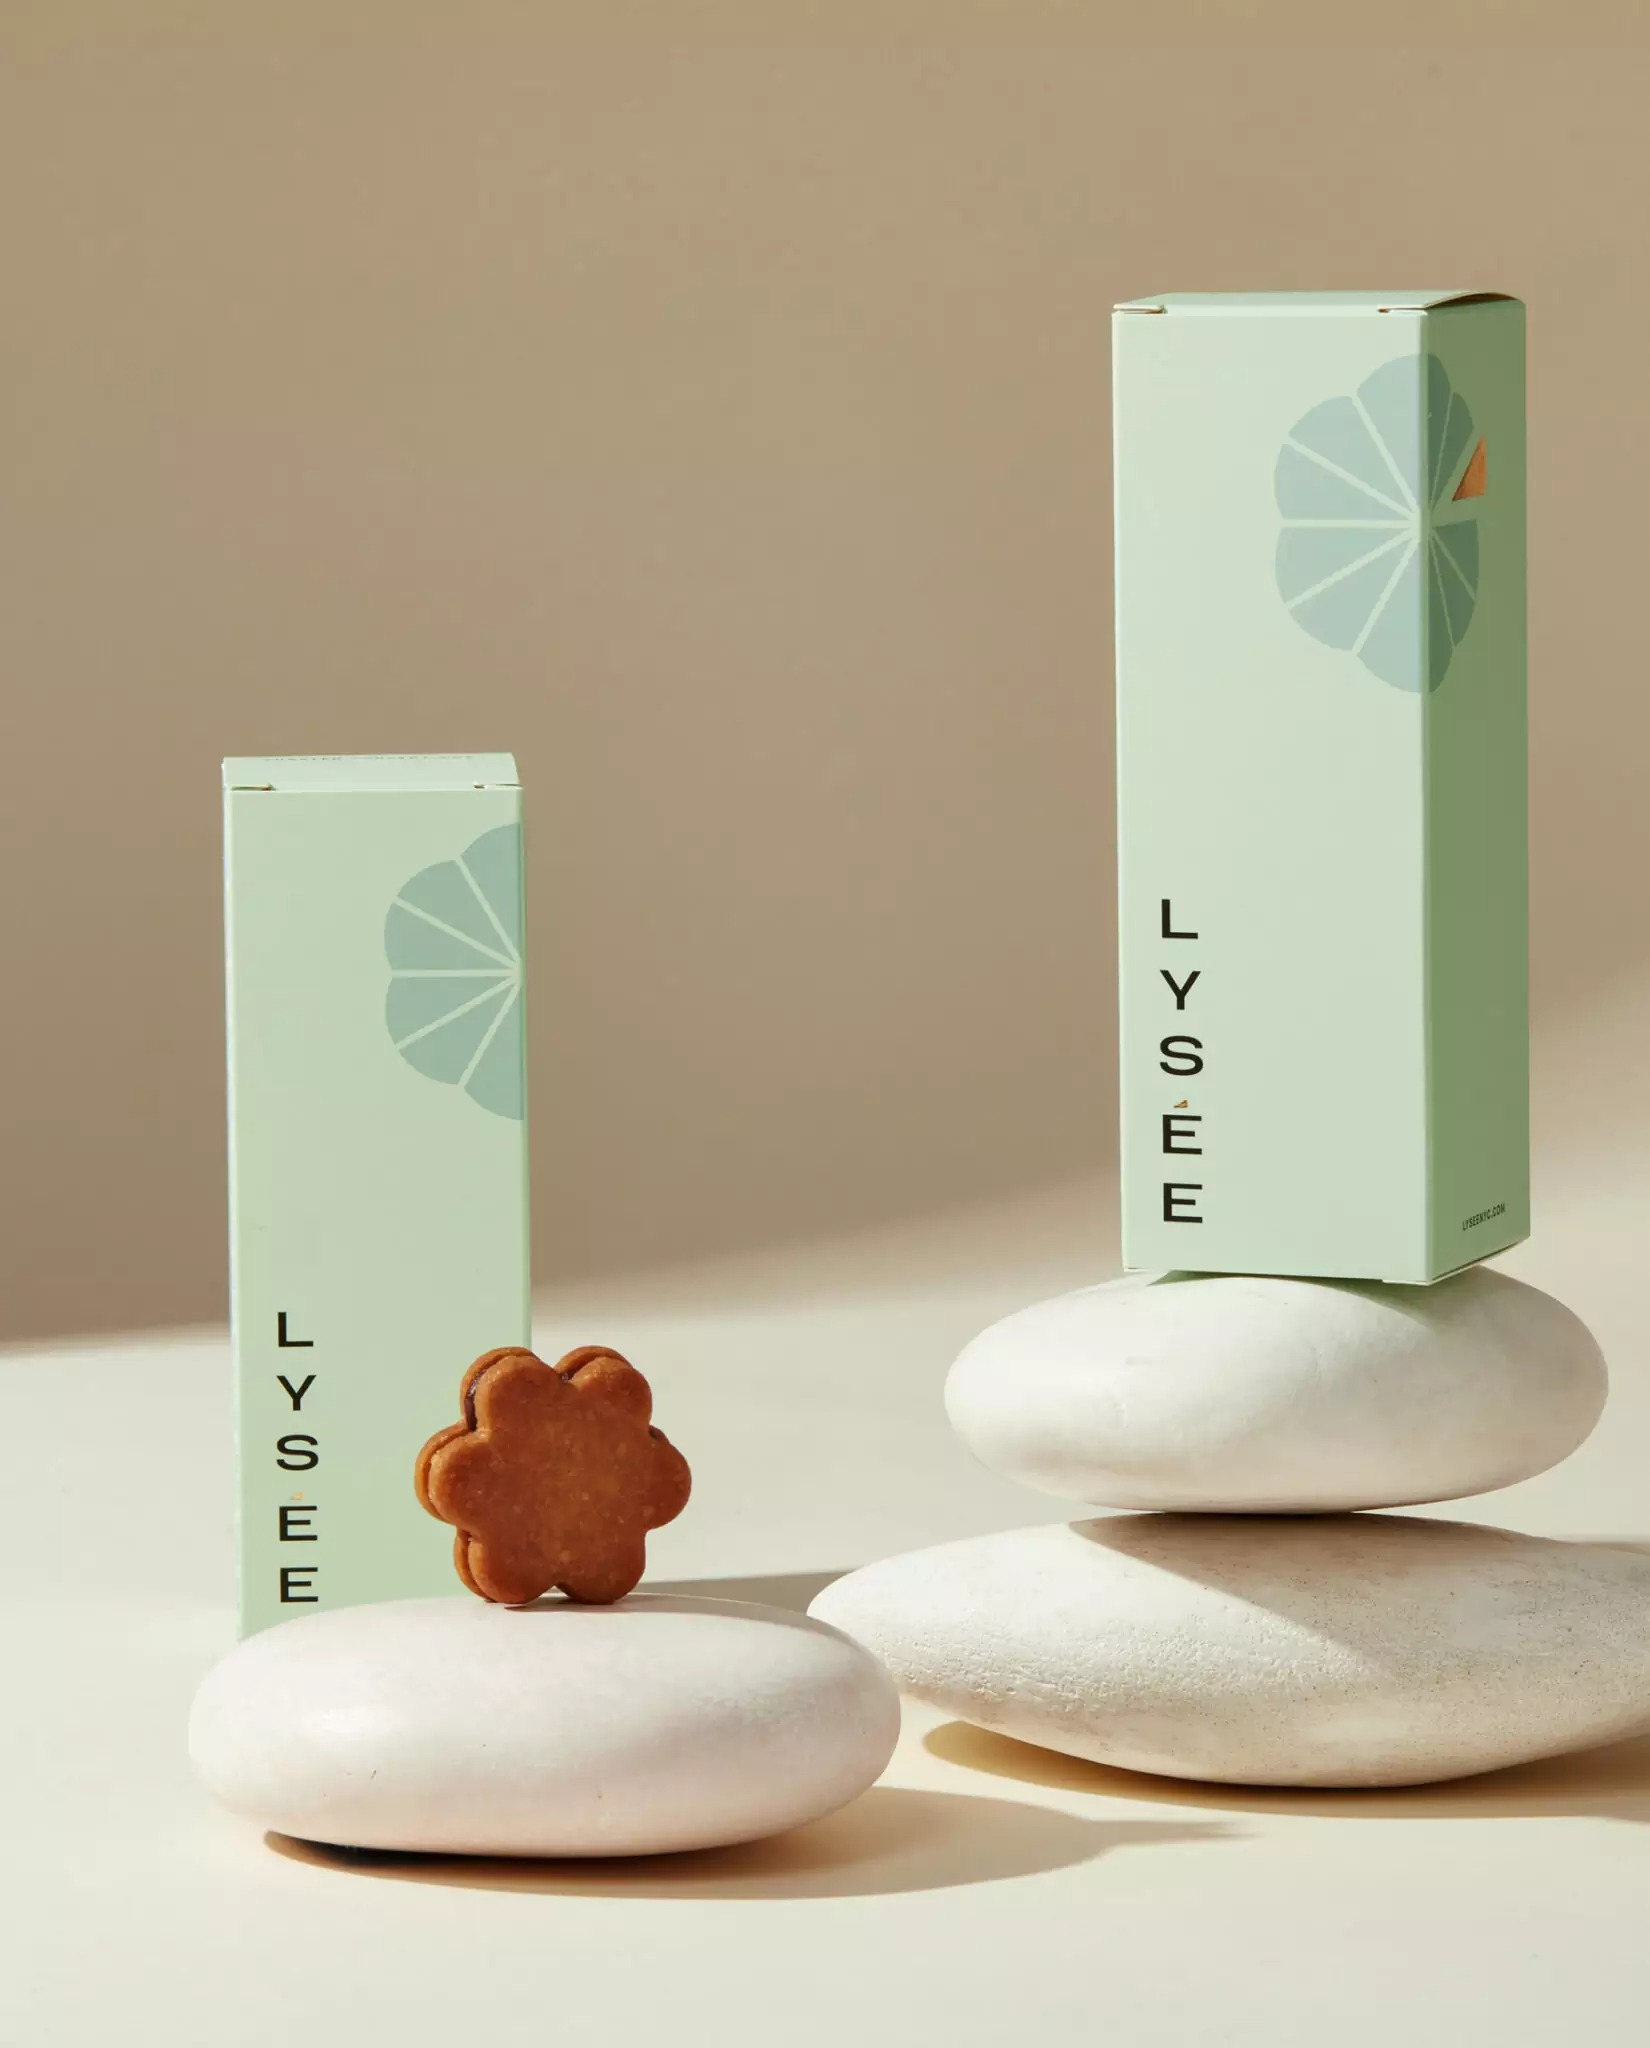 Lysée甜品店品牌形象设计